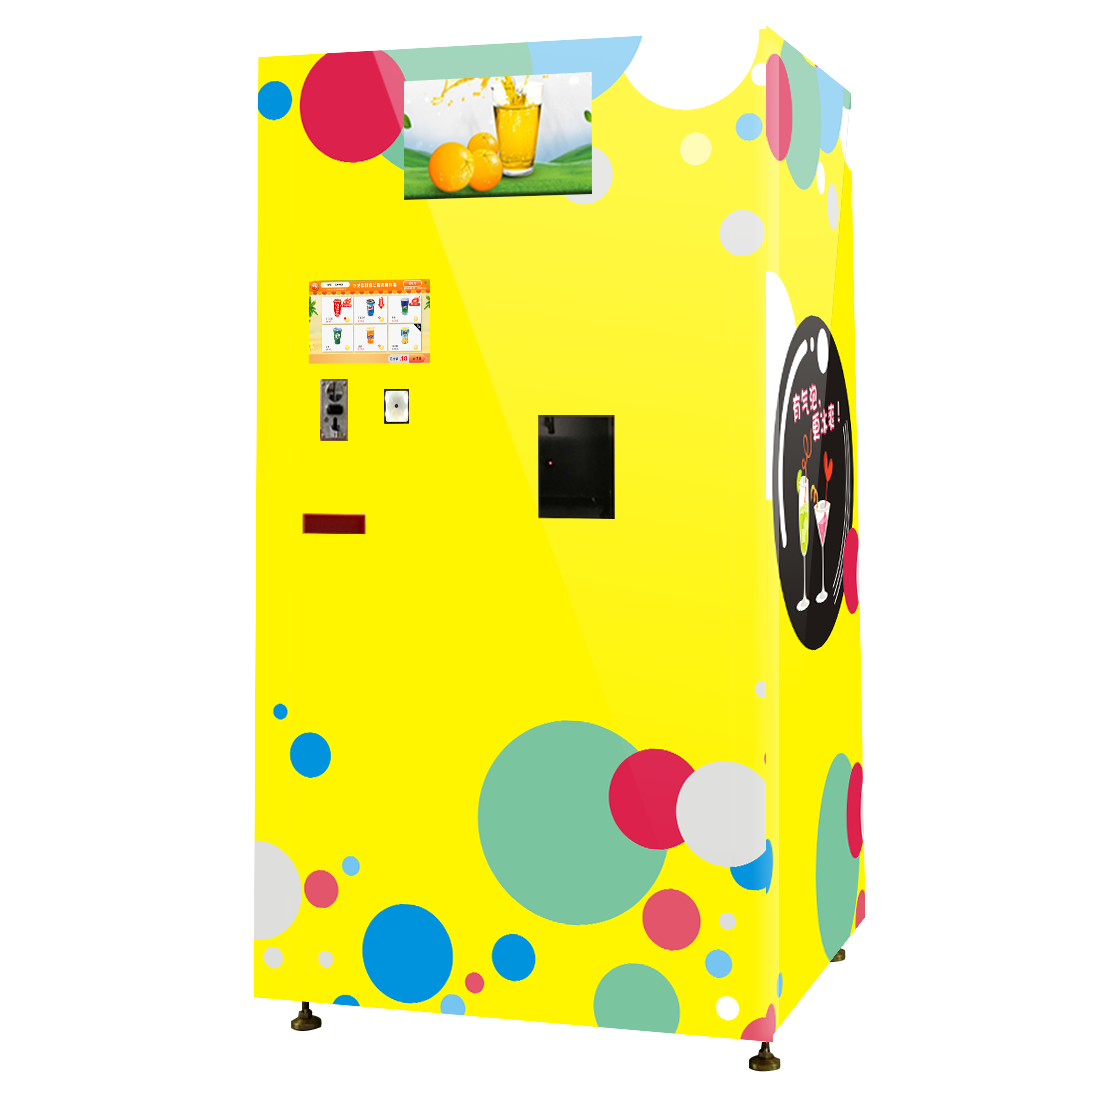 Máquina expendedora de refrescos Faygo para la venta